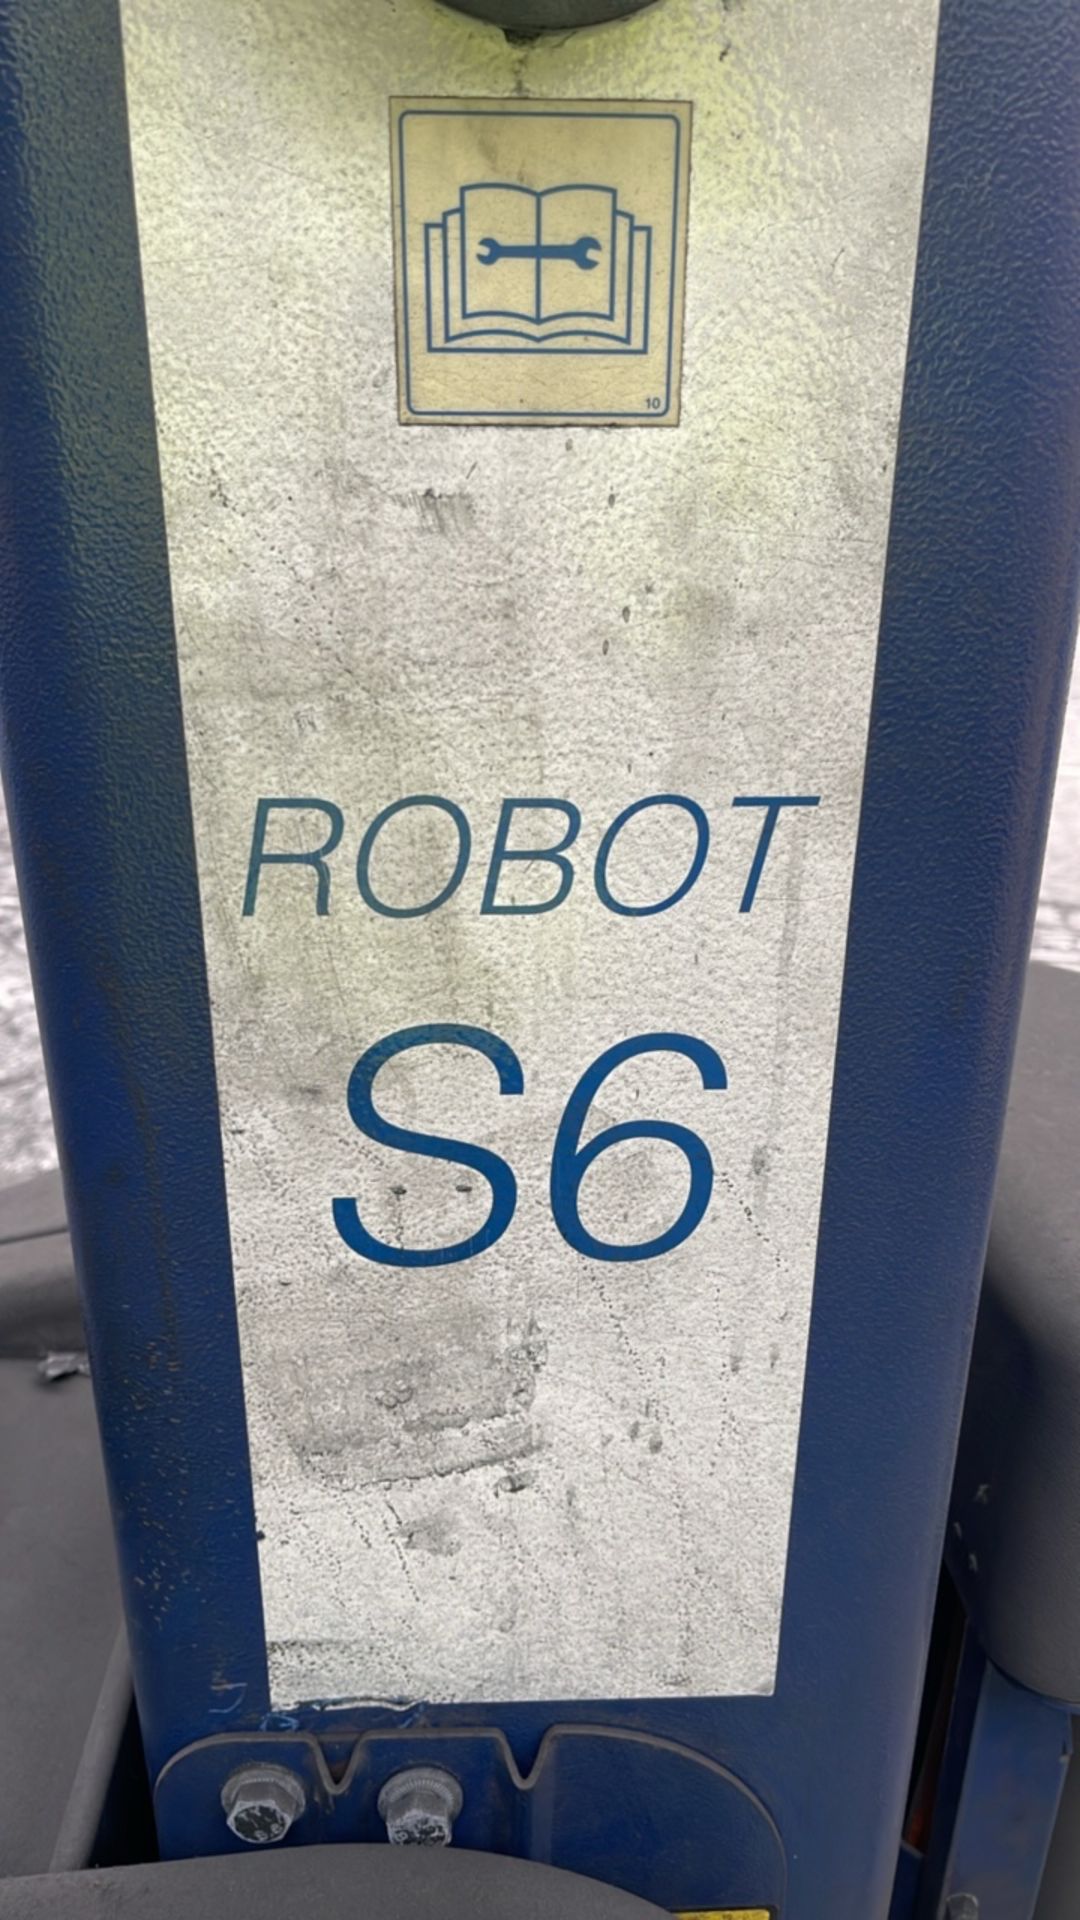 2017, Robopac Robot S6 Wrapper - Image 3 of 8